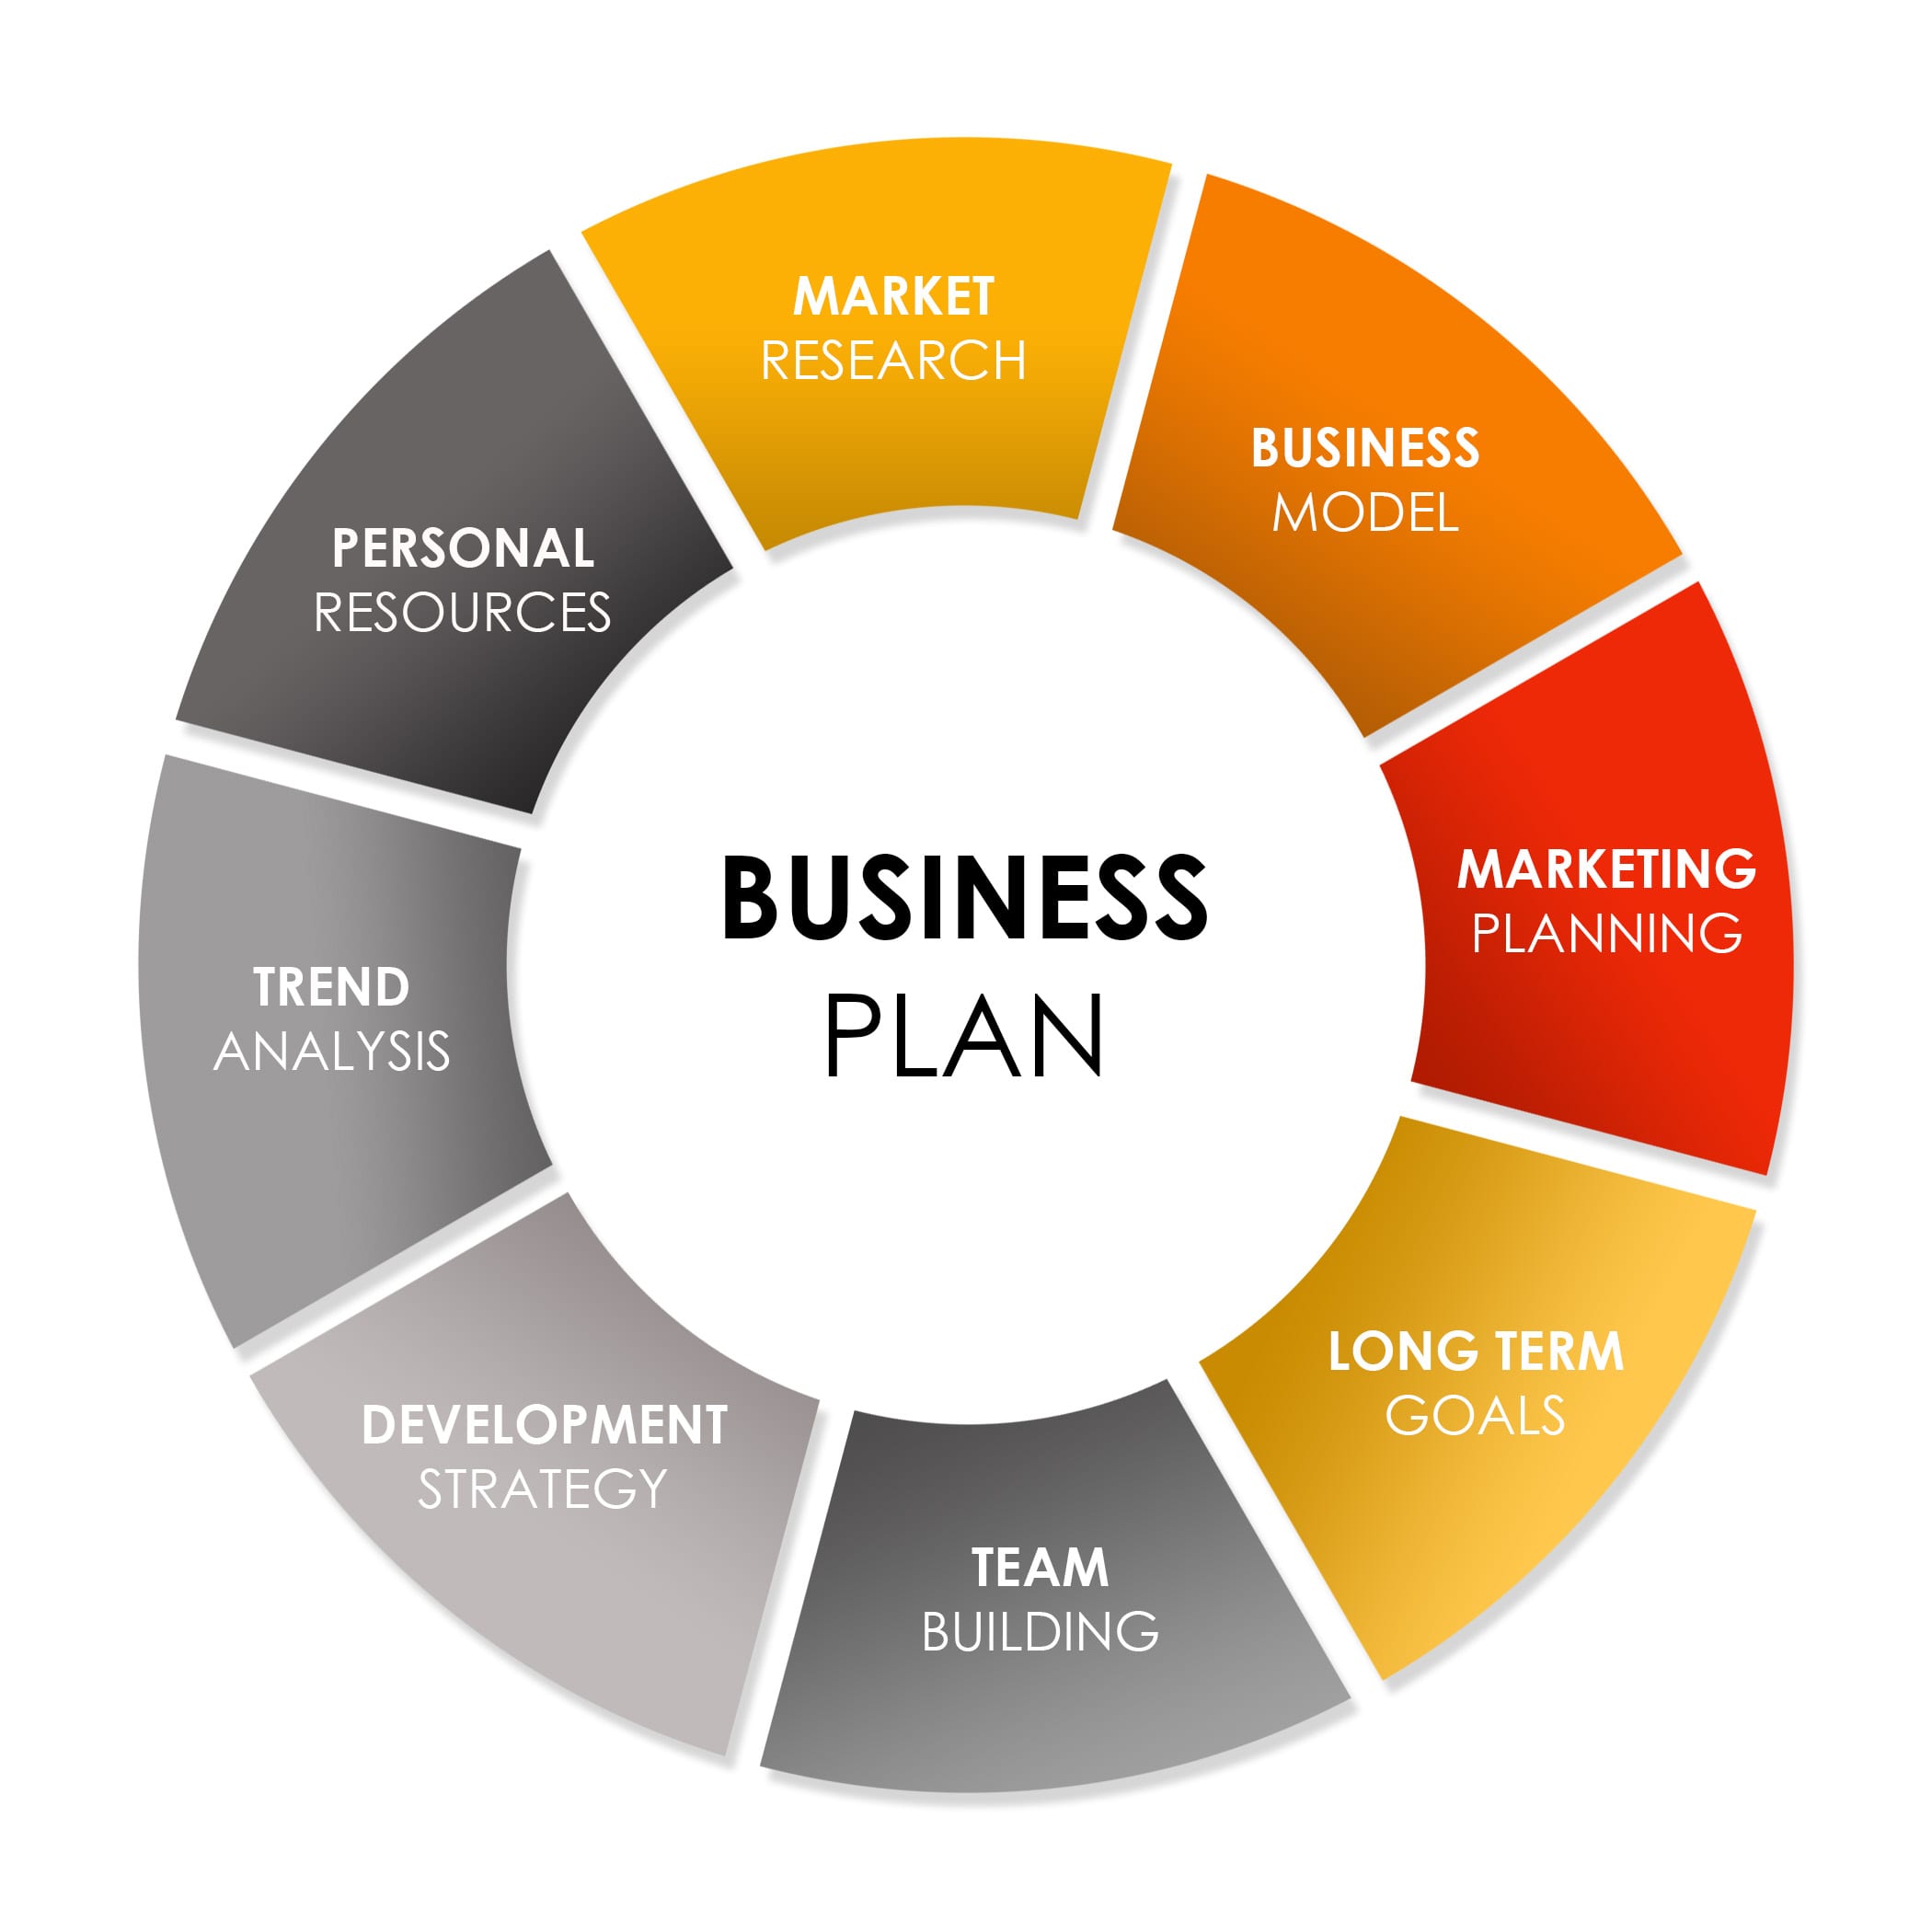 business system planning method